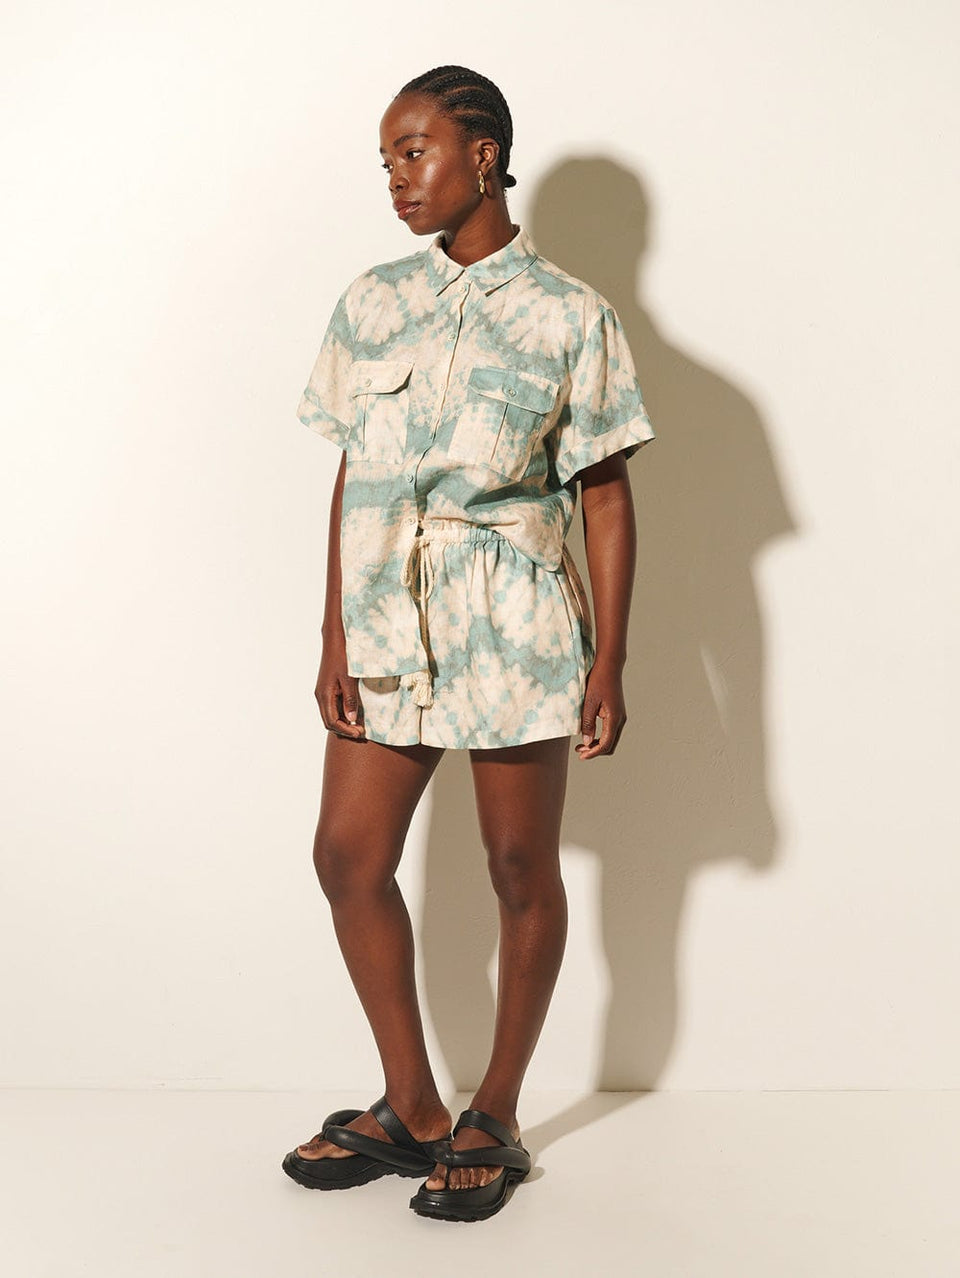 Mirage Short KIVARI | Model wears tie dye shorts with matching top side view